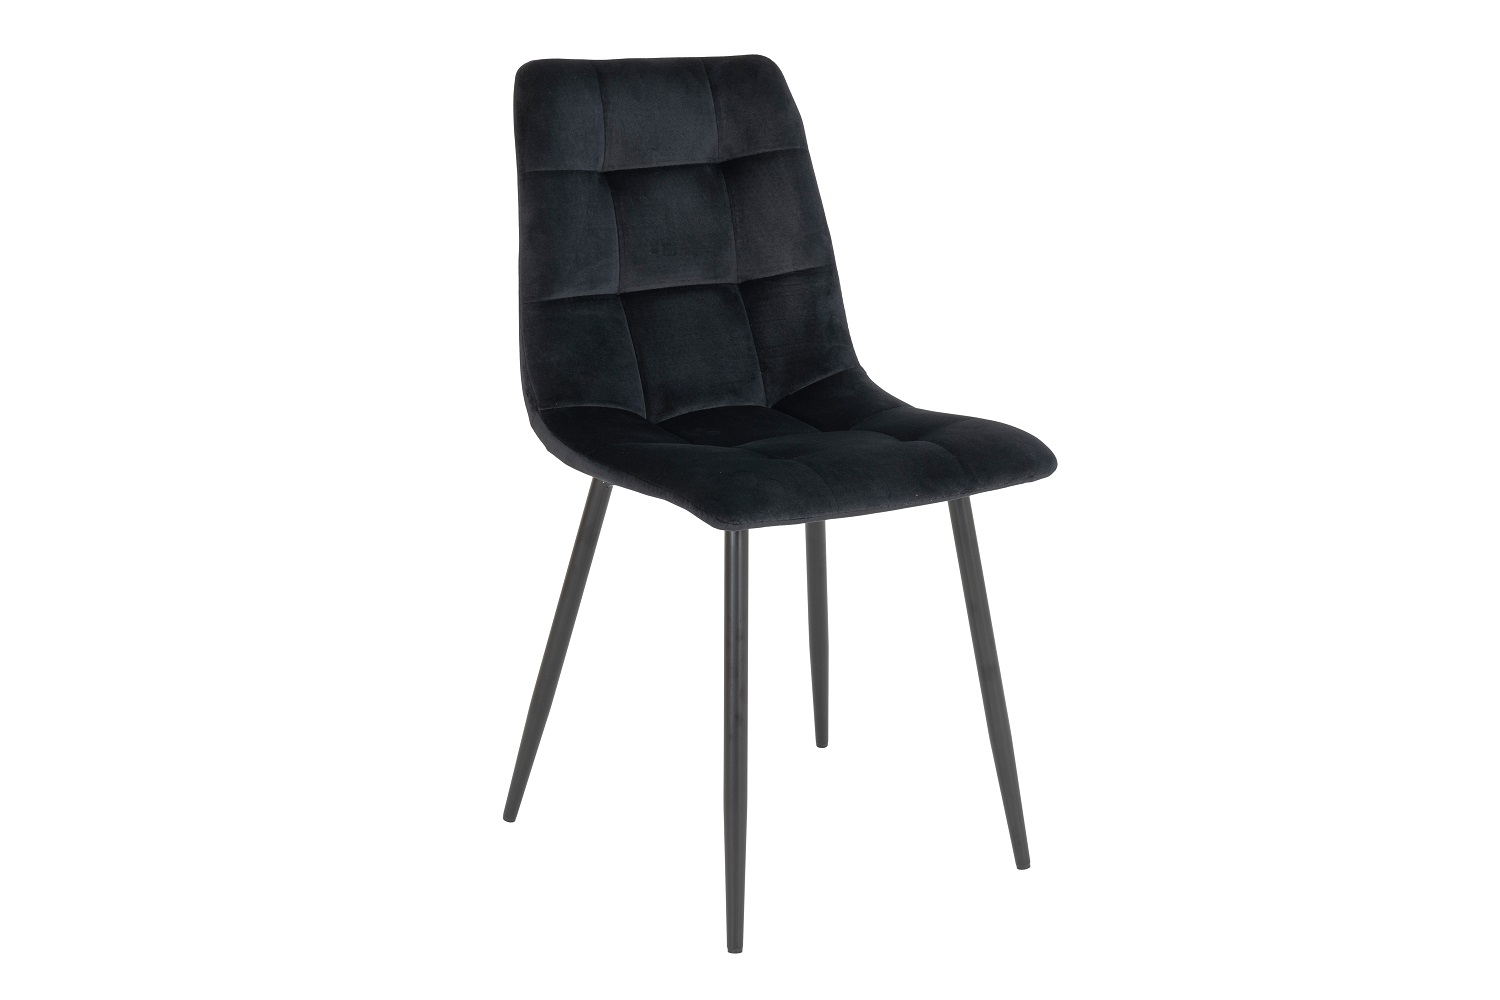 Norddan Designová židle Dominik černá